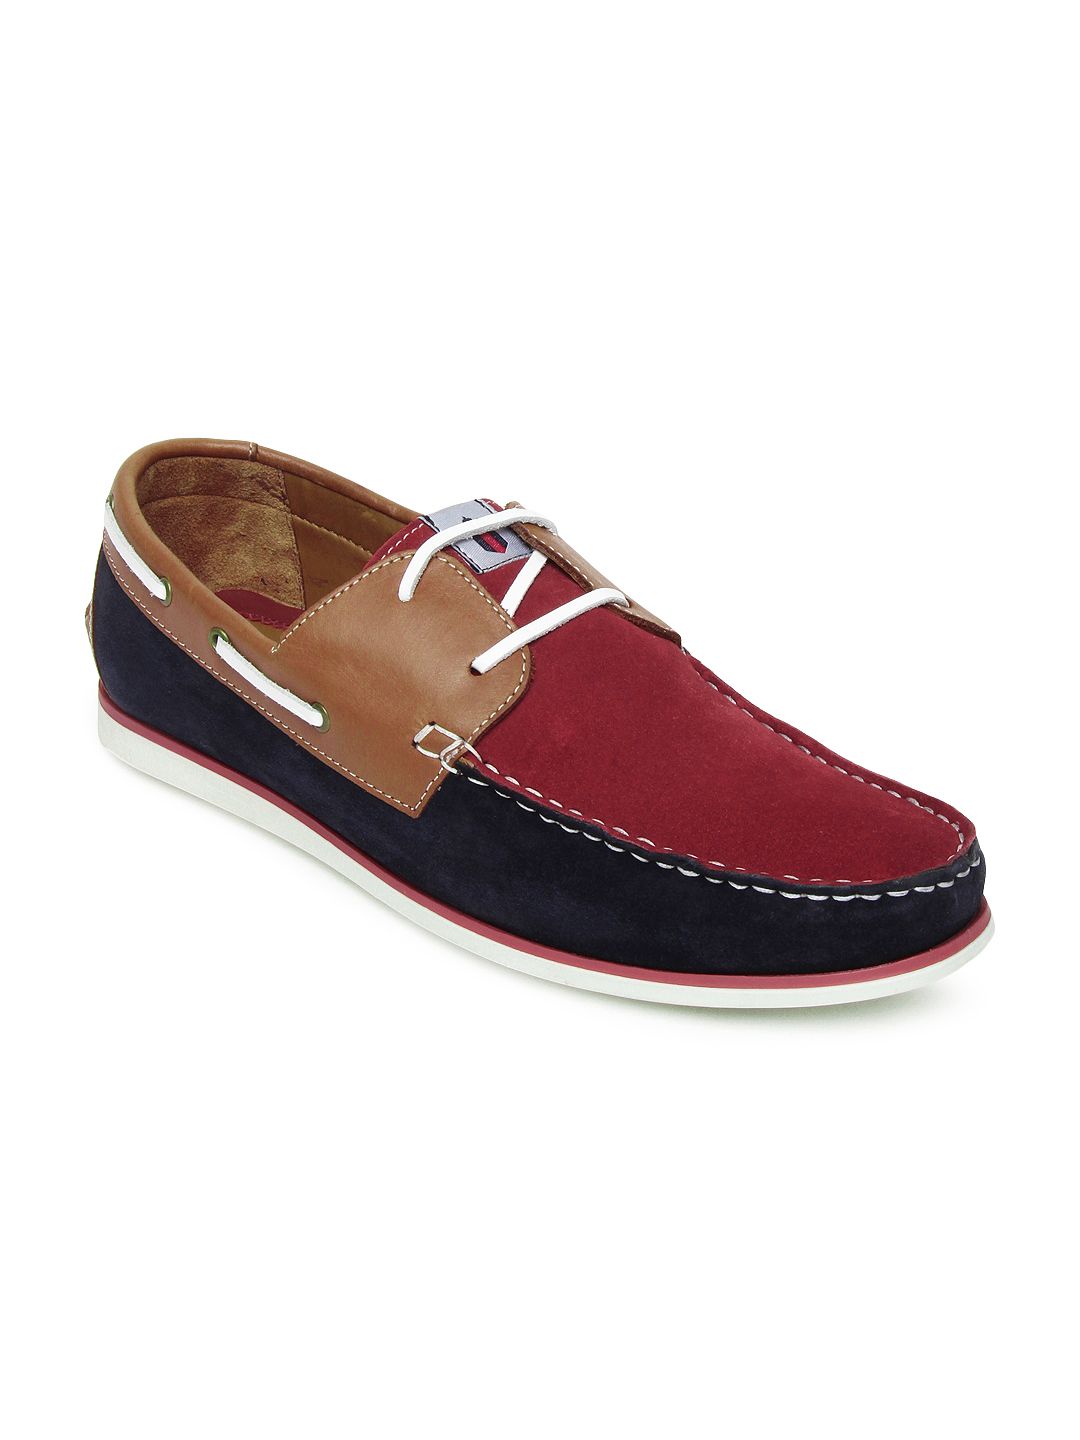 Buy Louis Philippe Men Red & Navy Boat Shoes - 632 - Footwear for Men - 256704